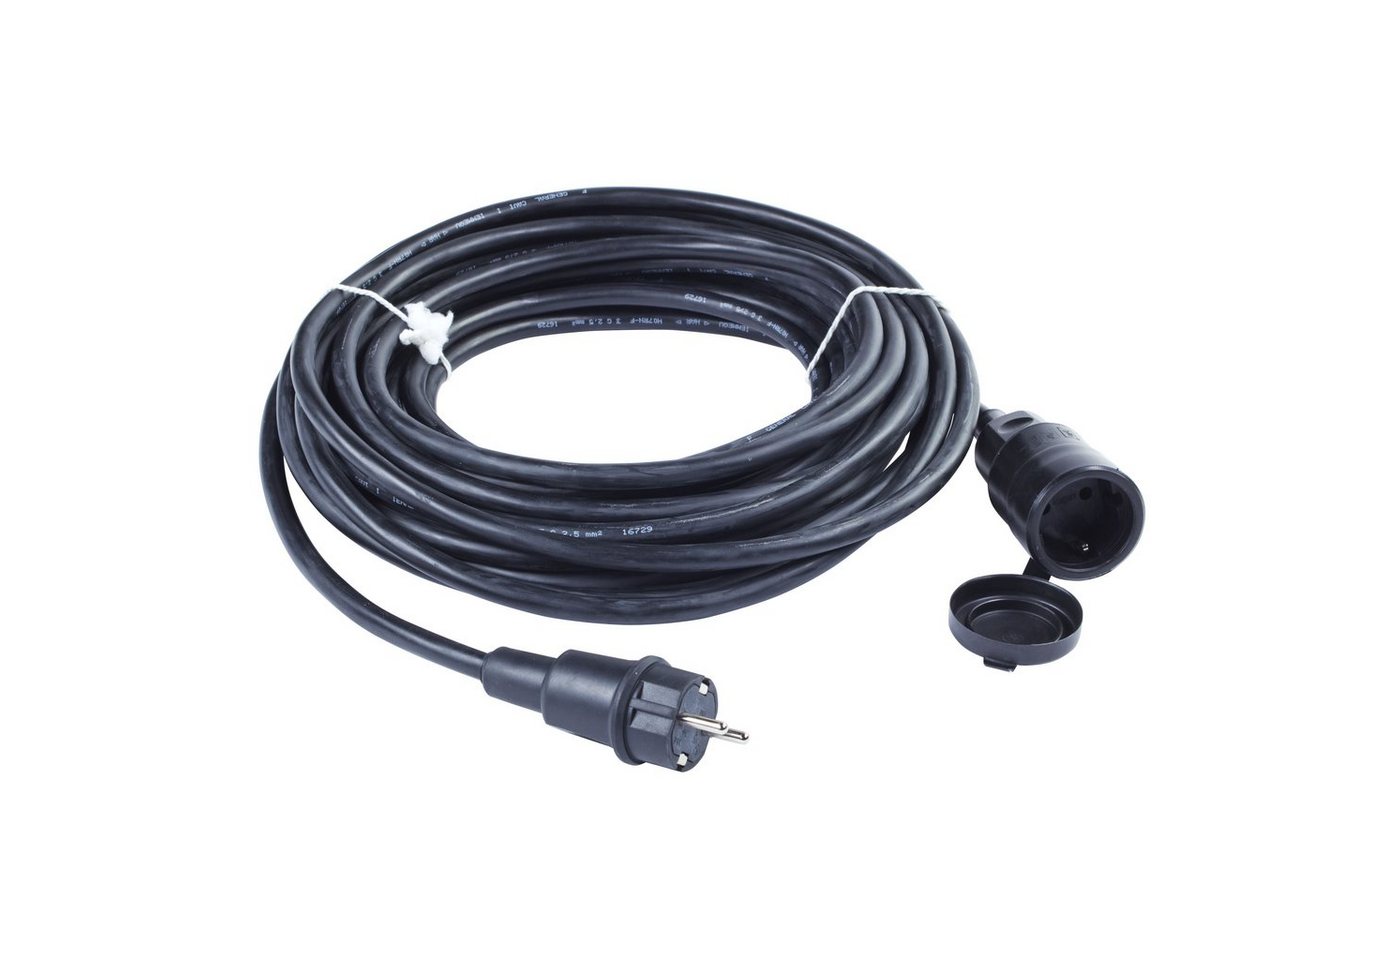 lightmaXX Netzkabel, Power Extension Cord, High-Quality Extension Cable, 16A von lightmaXX